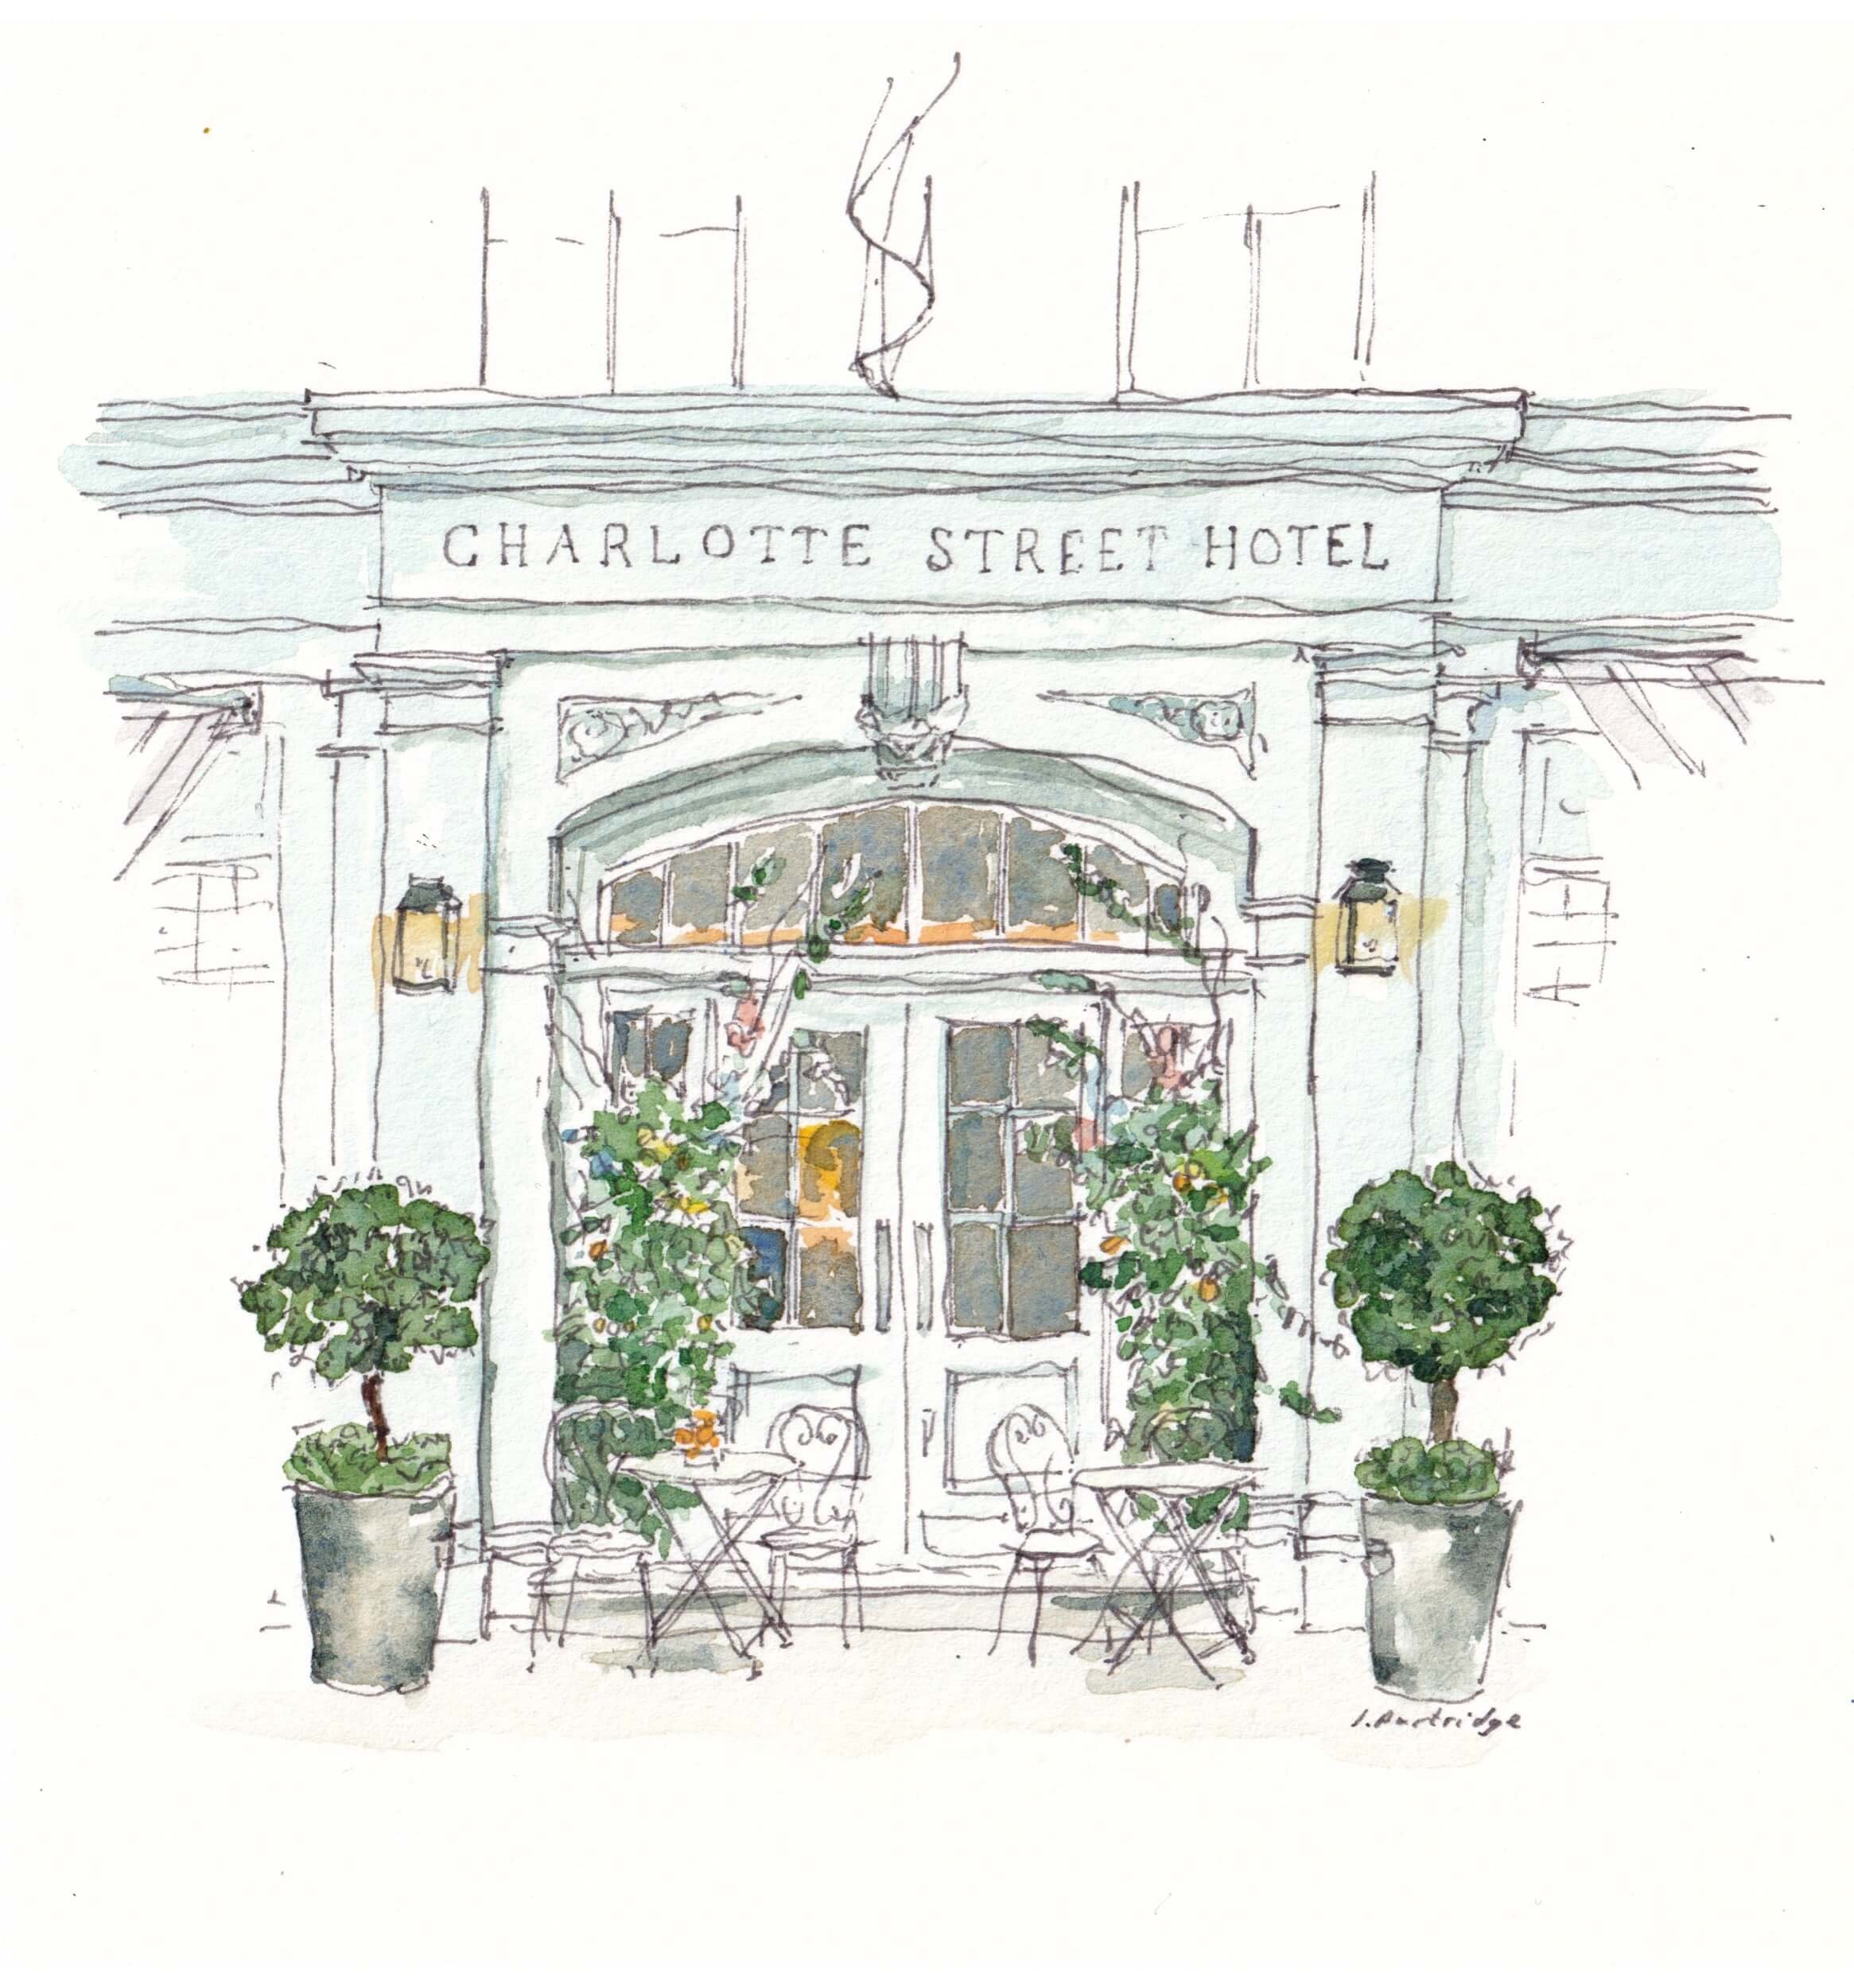 Building Illustration of Charlotte Street Hotel